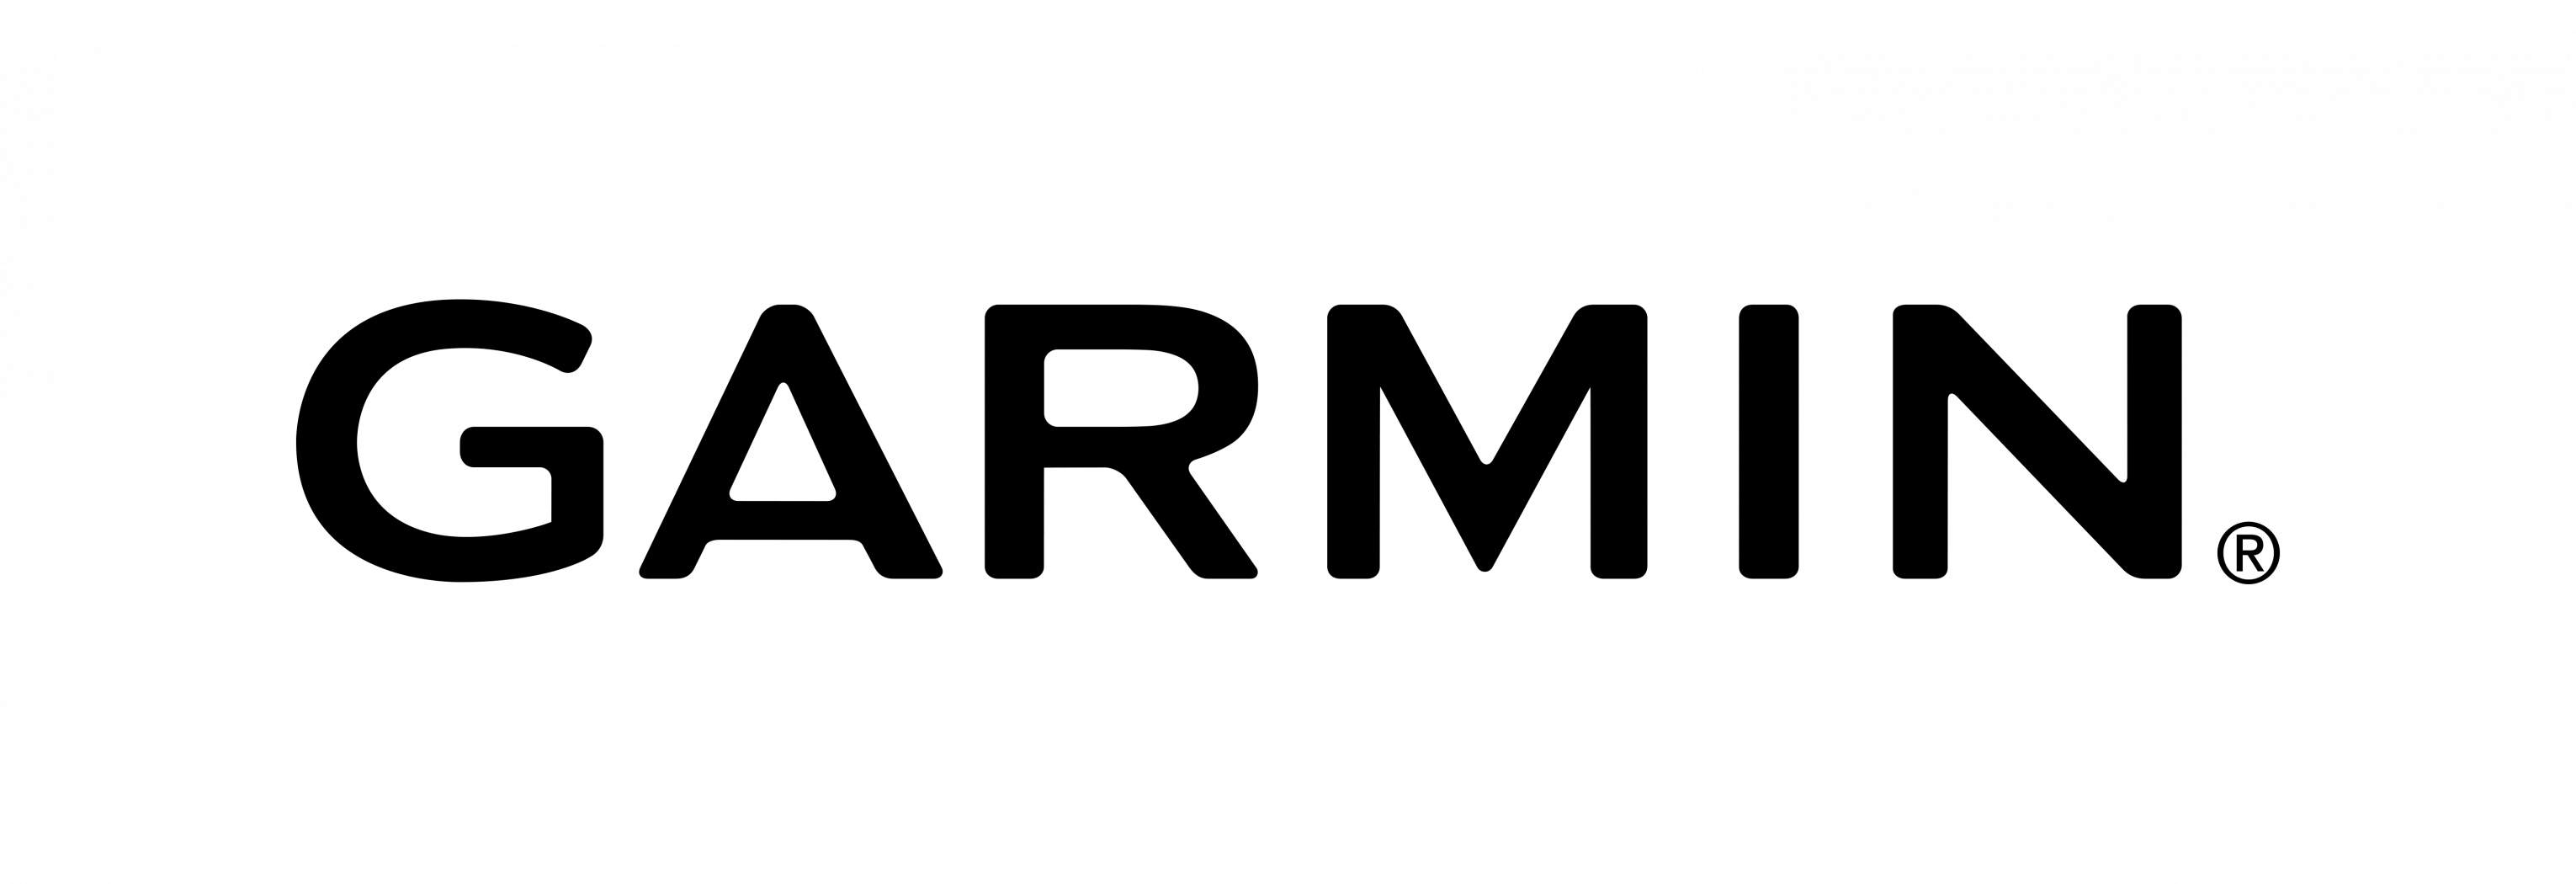 Garmin logo Black Friday